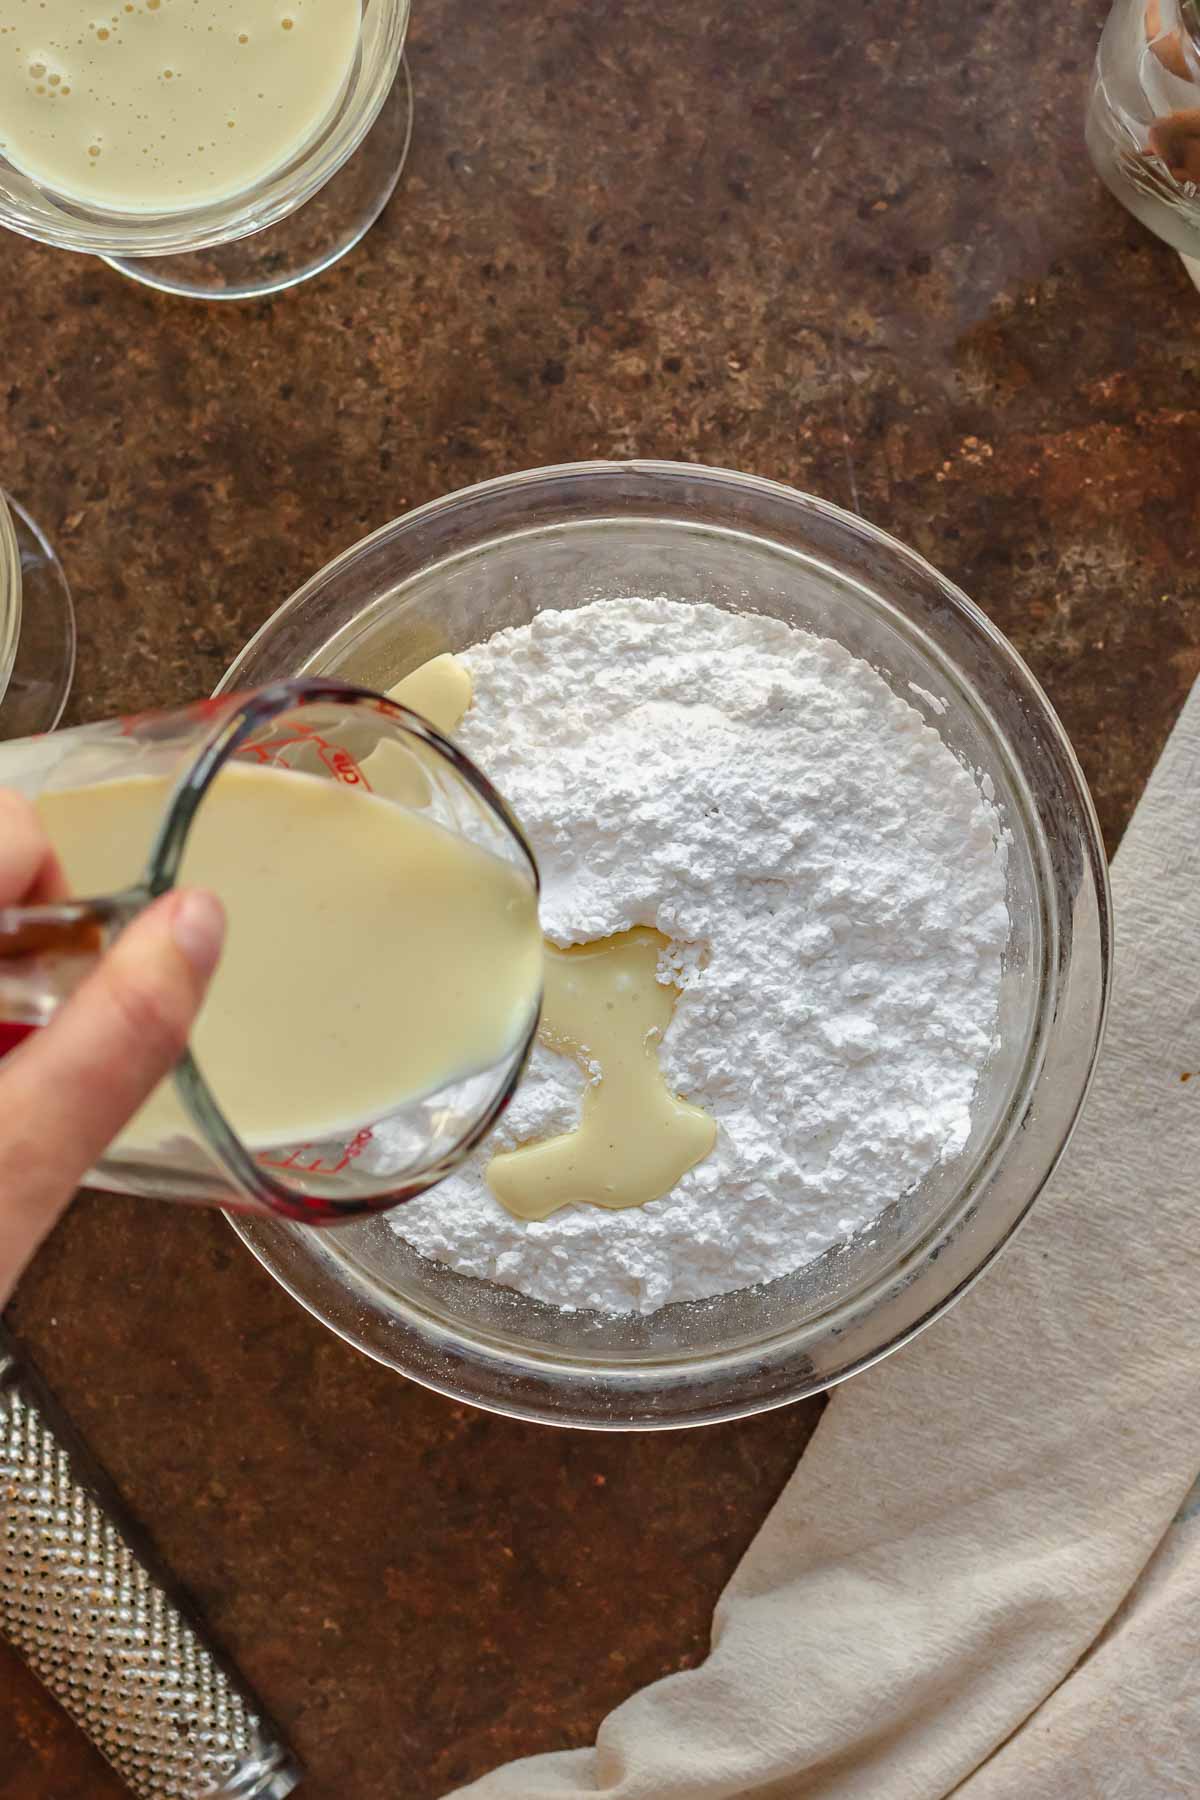 Eggnog being poured into a bowl of powdered sugar.